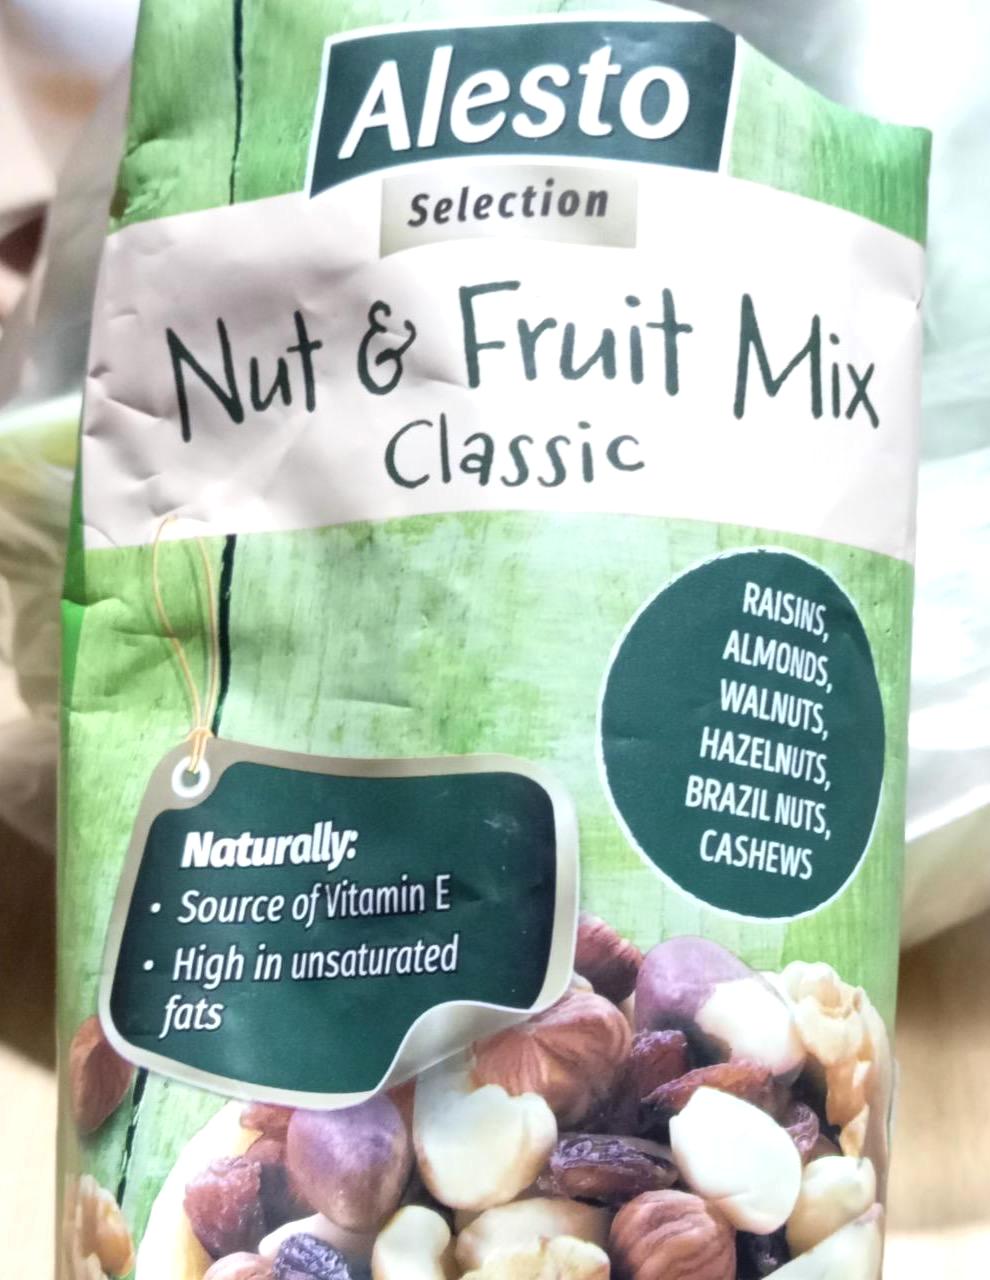 Képek - Nut & fruit mix Classic Alesto